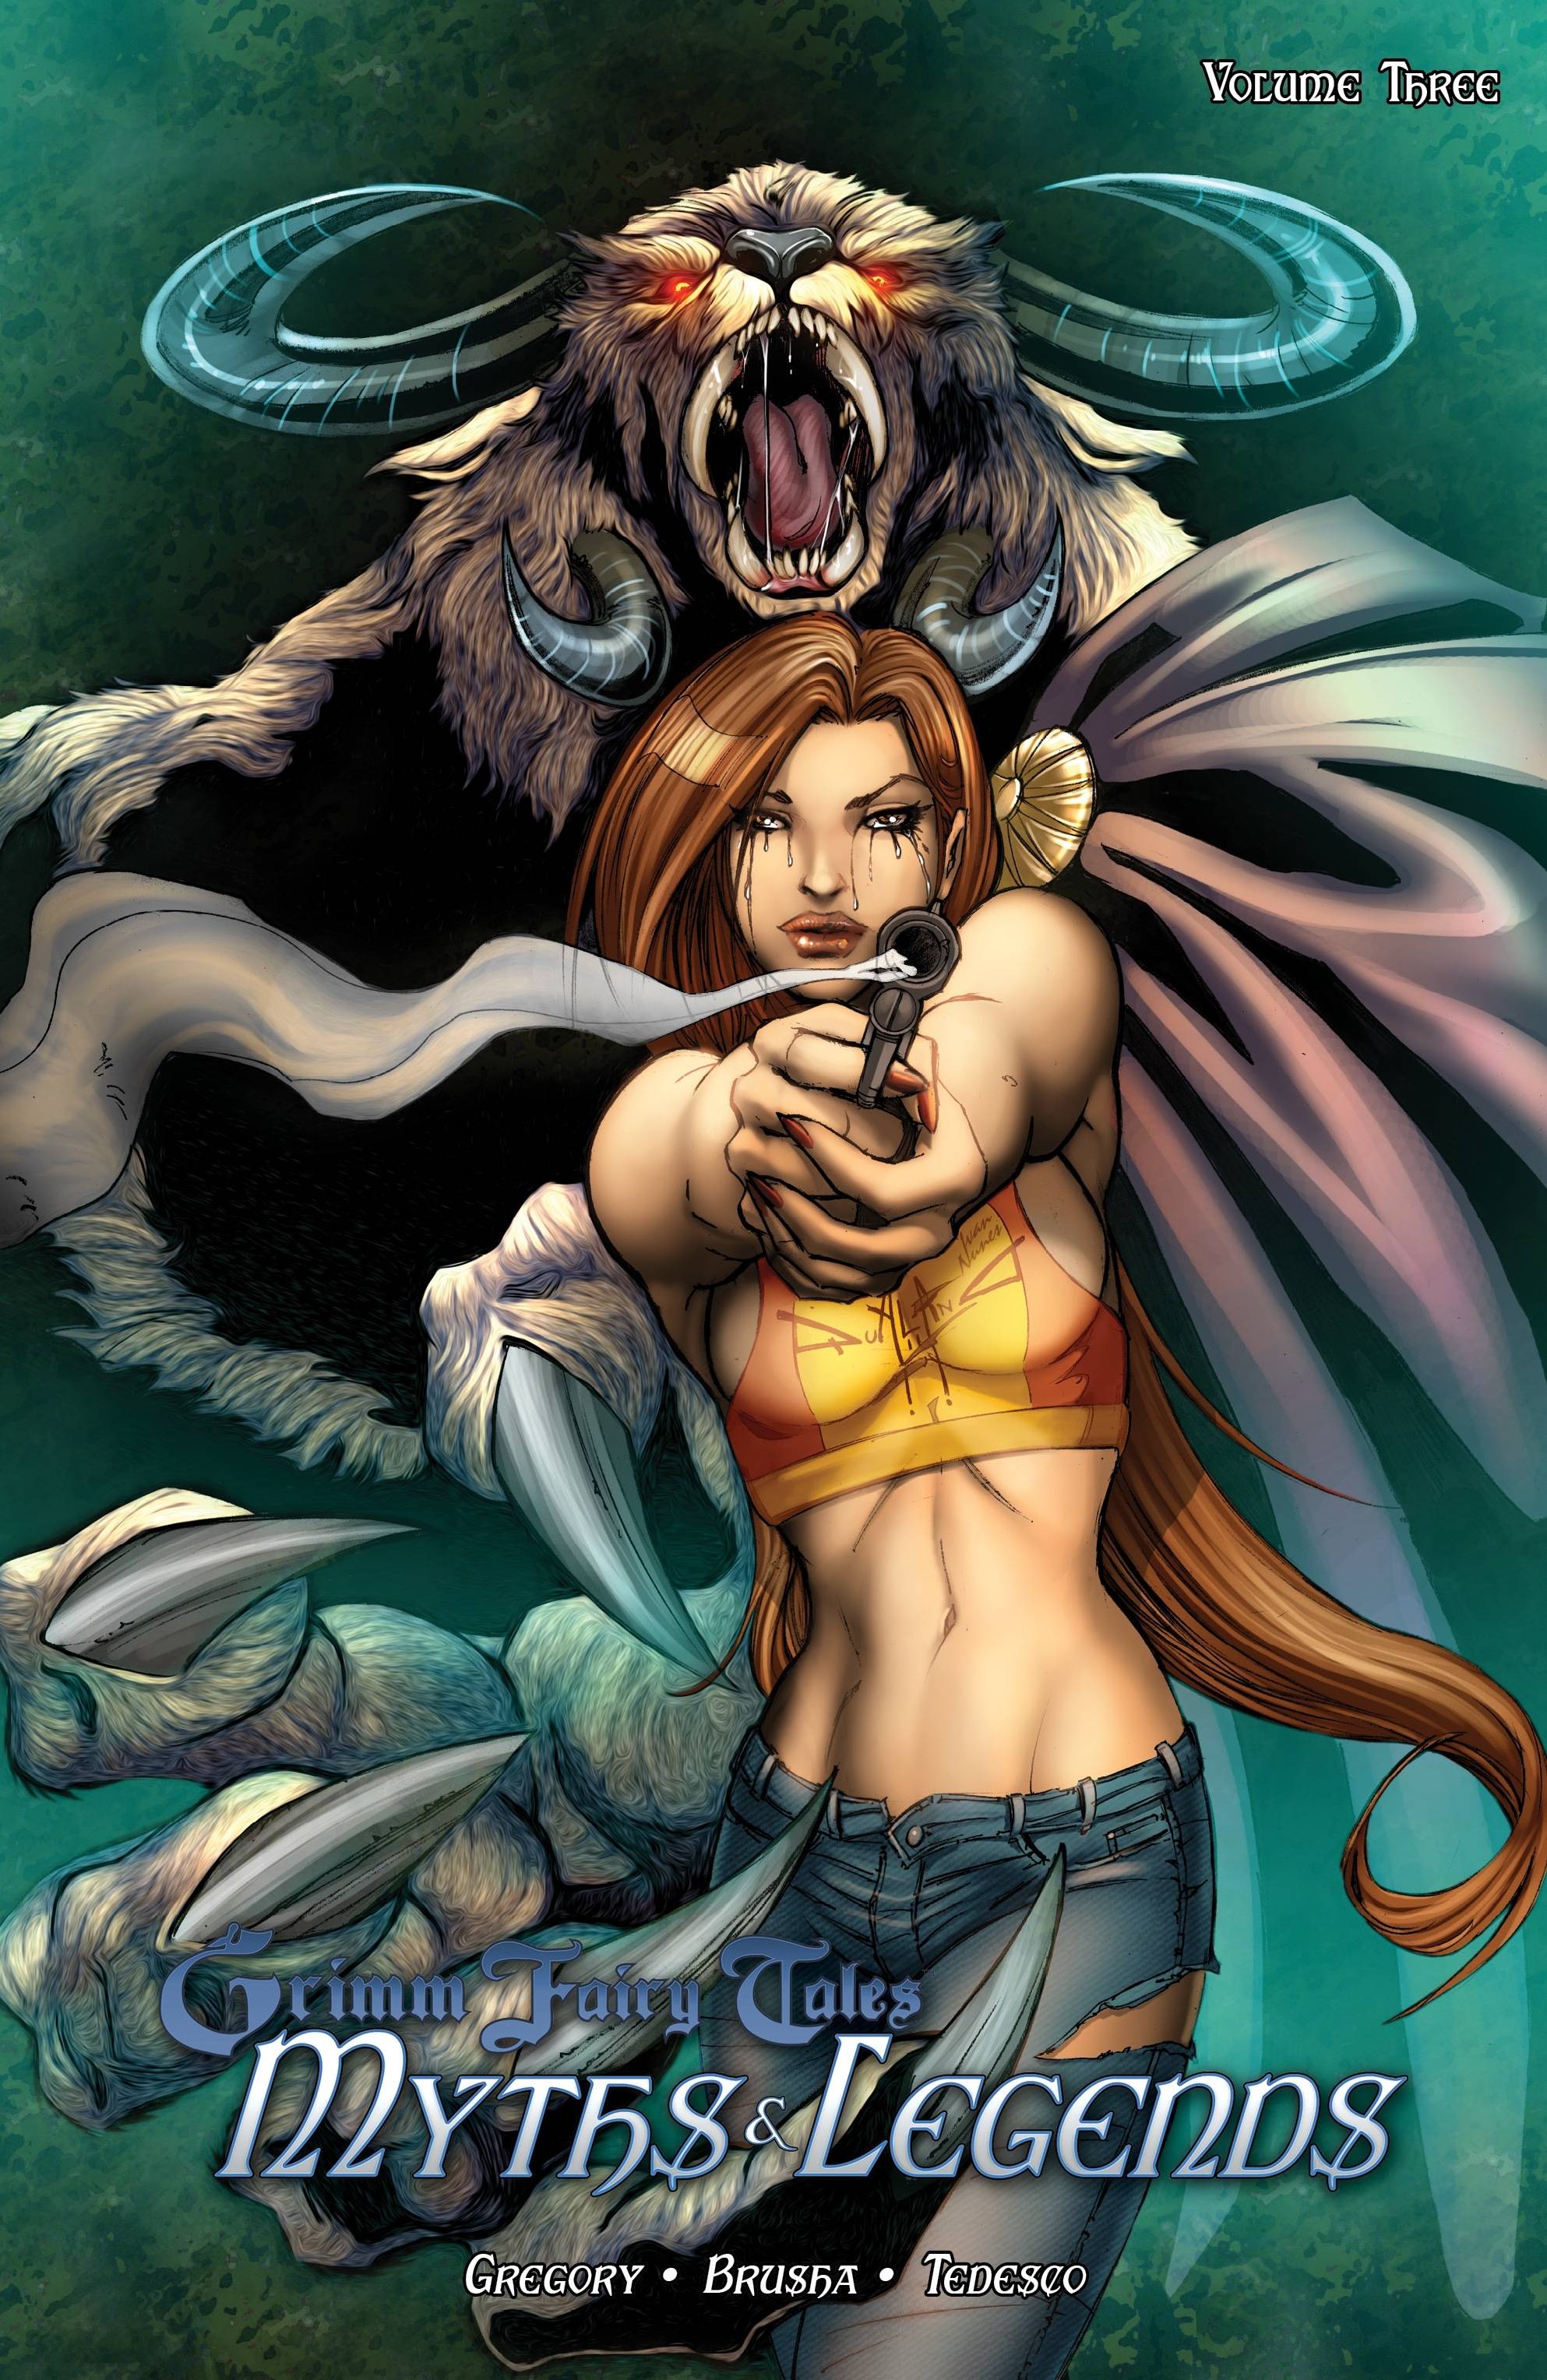 Grimm Fairy Tales Myths & Legends TP VOL 3